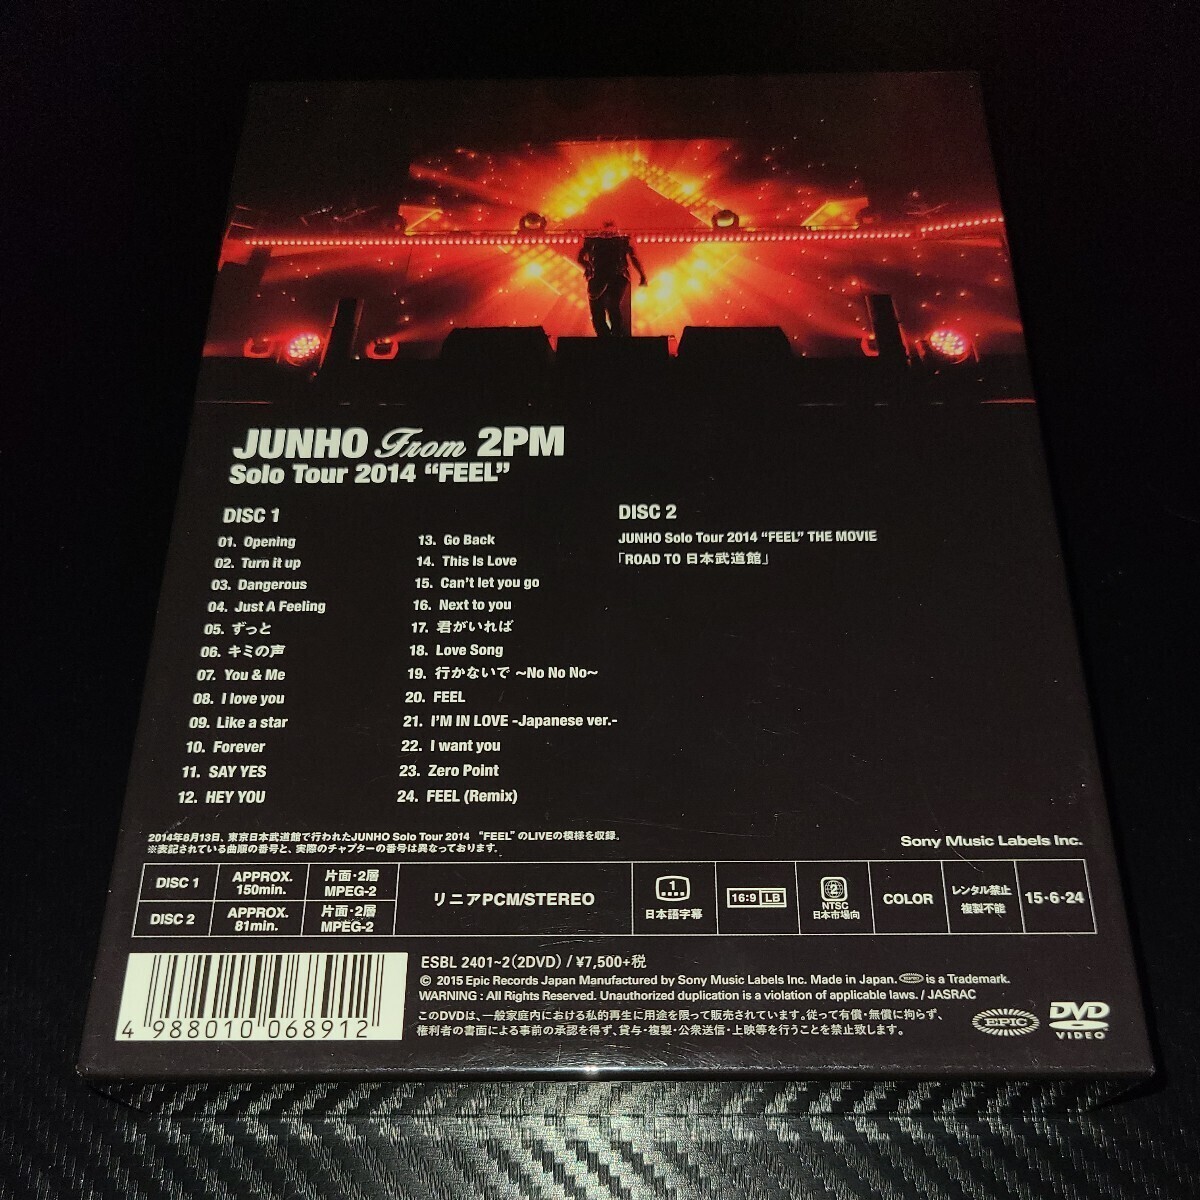 【DVD】JUNHO Solo Tour 2014 FEEL 2PM ジュノ LIVE DVD 日本武道館 It's2PM LEEJUNHO イジュノの画像2